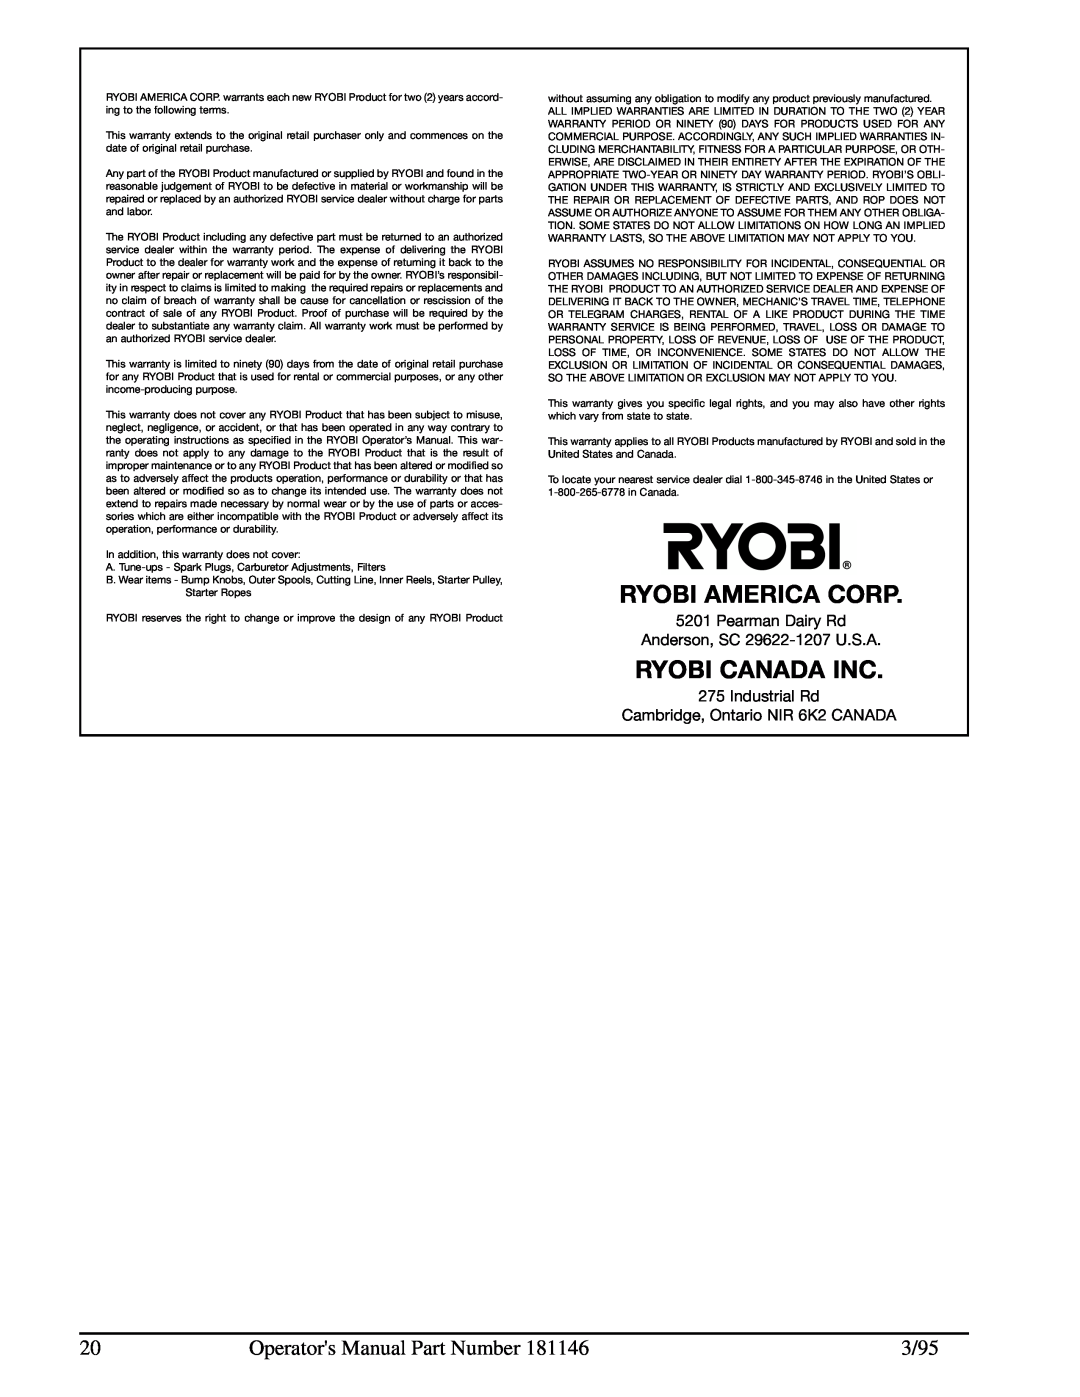 Ryobi 310r manual Ryobi America Corp, Ryobi Canada Inc, Operators Manual Part Number, 3/95 